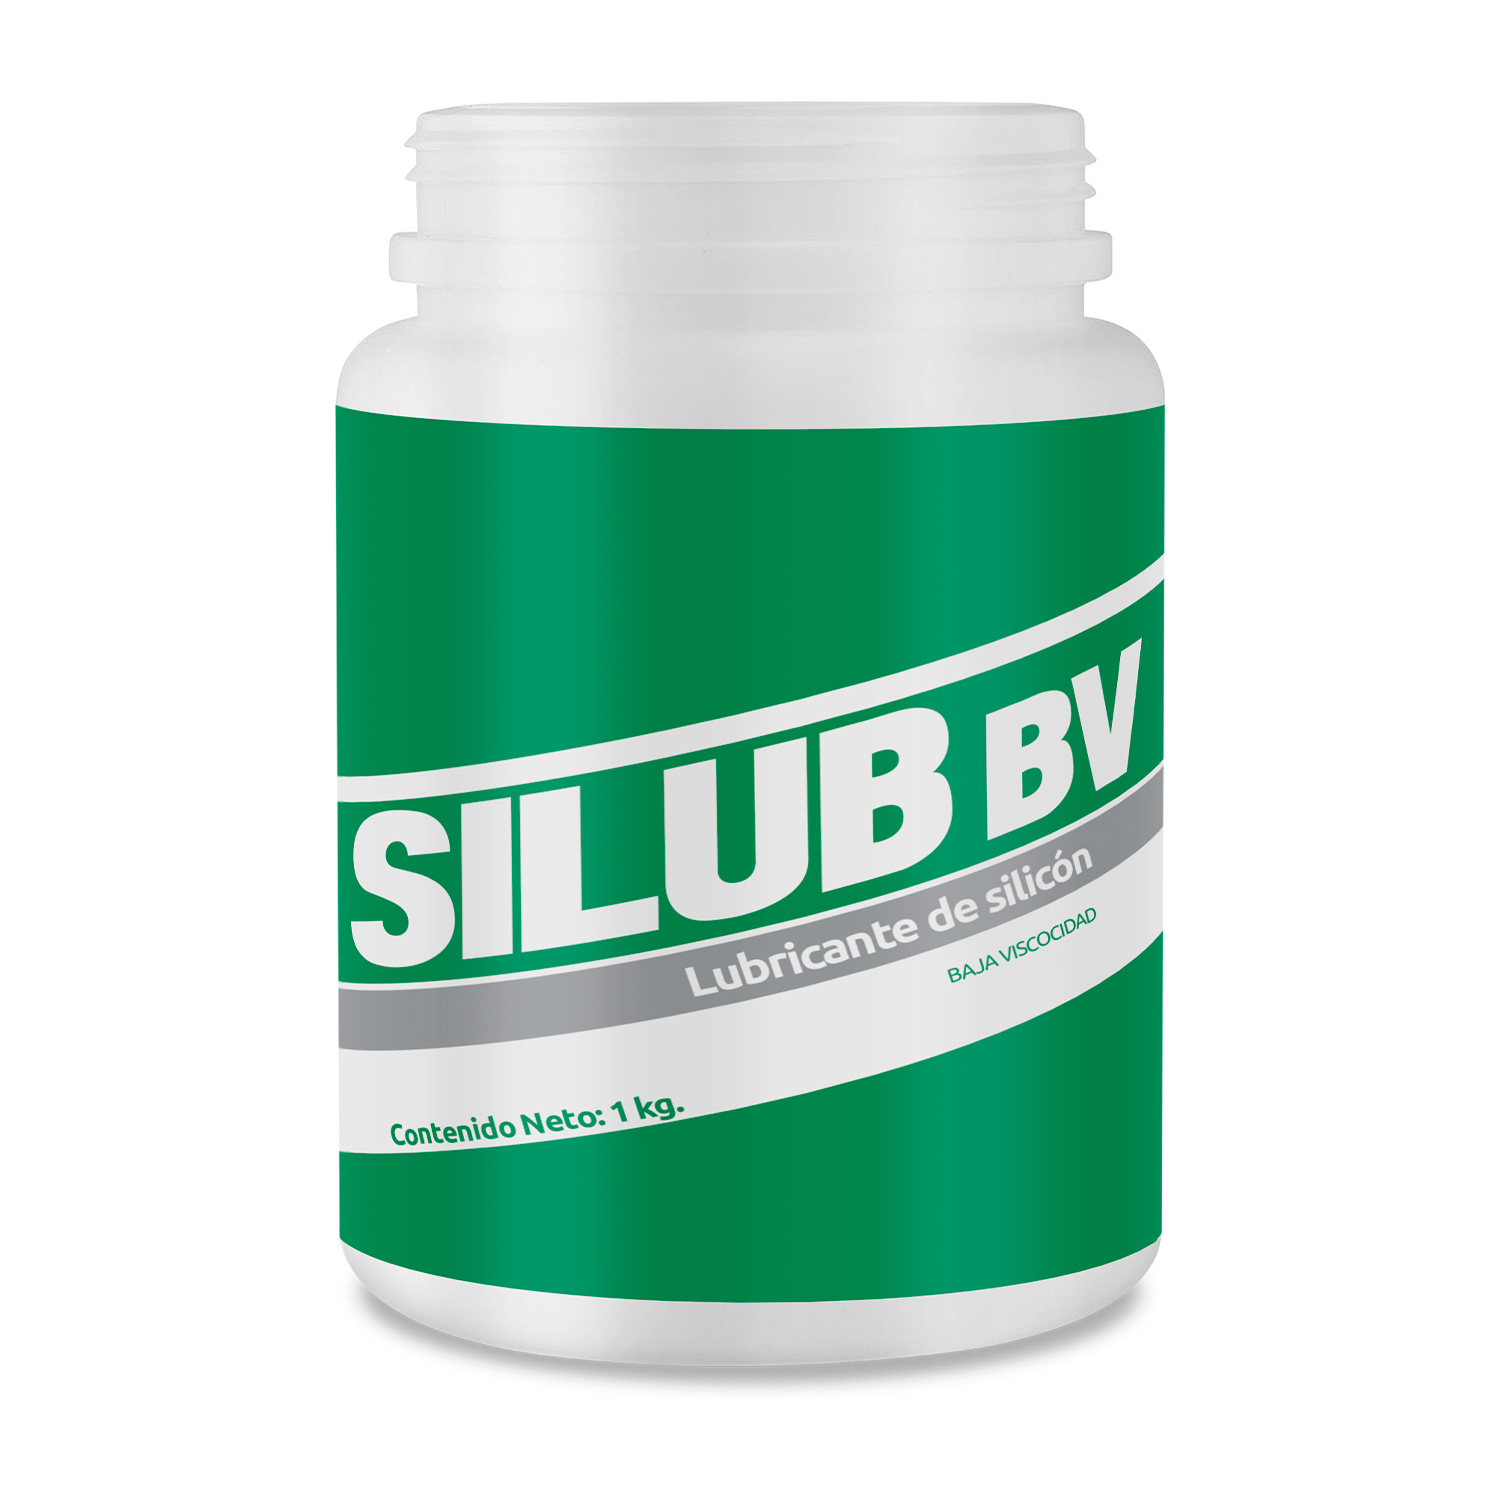 Silimex Silub Bv Bote Lubricante De Silicon De Baja Viscosidad 1 Kilo SILUB BV 1 LITRO - SILUB BV 1 LITRO